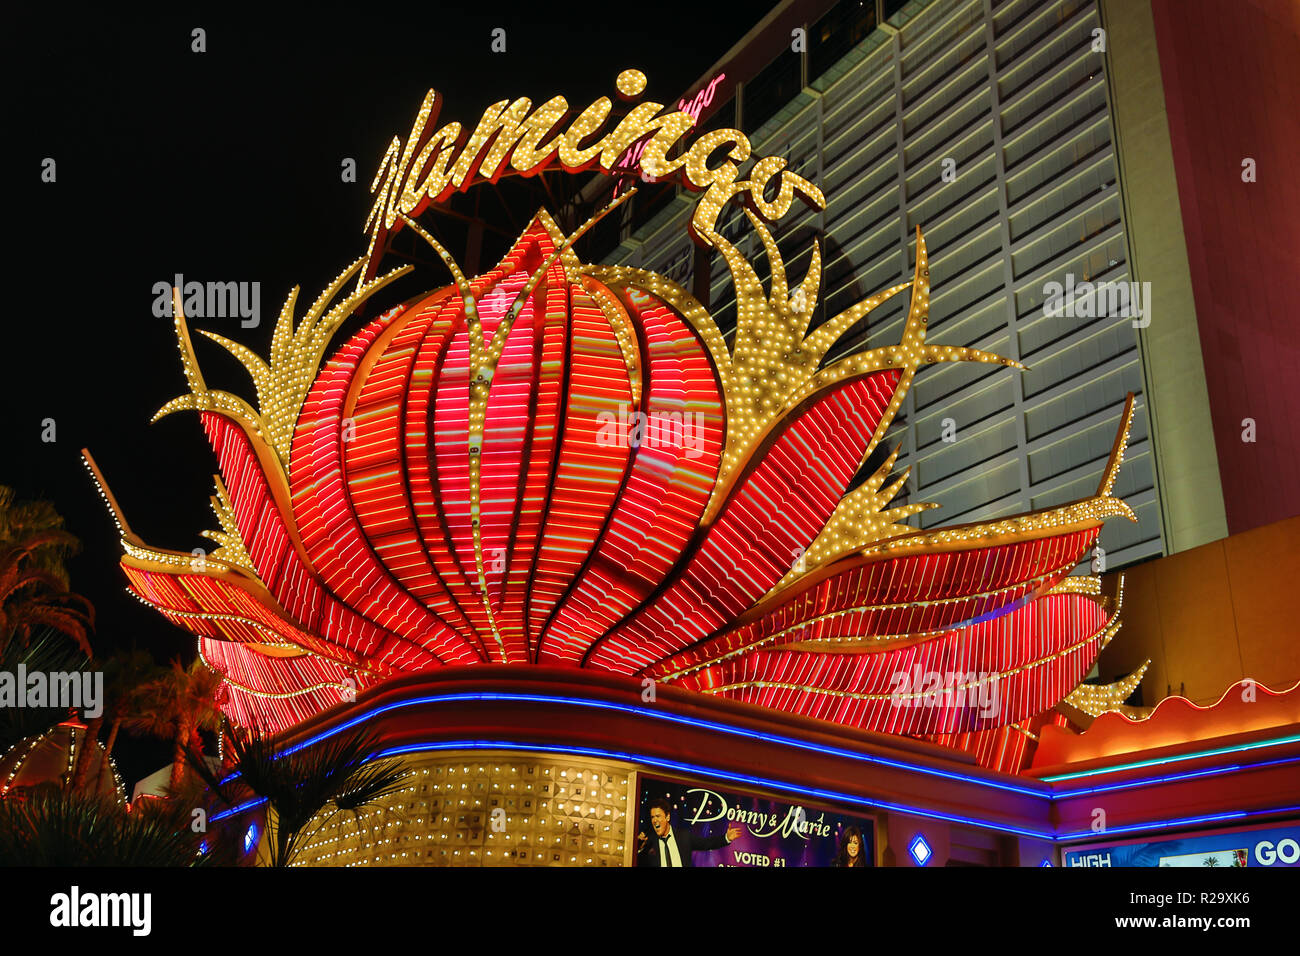 Neon lights of the Flamingo Hotel and Casino at night, Las Vegas, Nevada, America Stock Photo